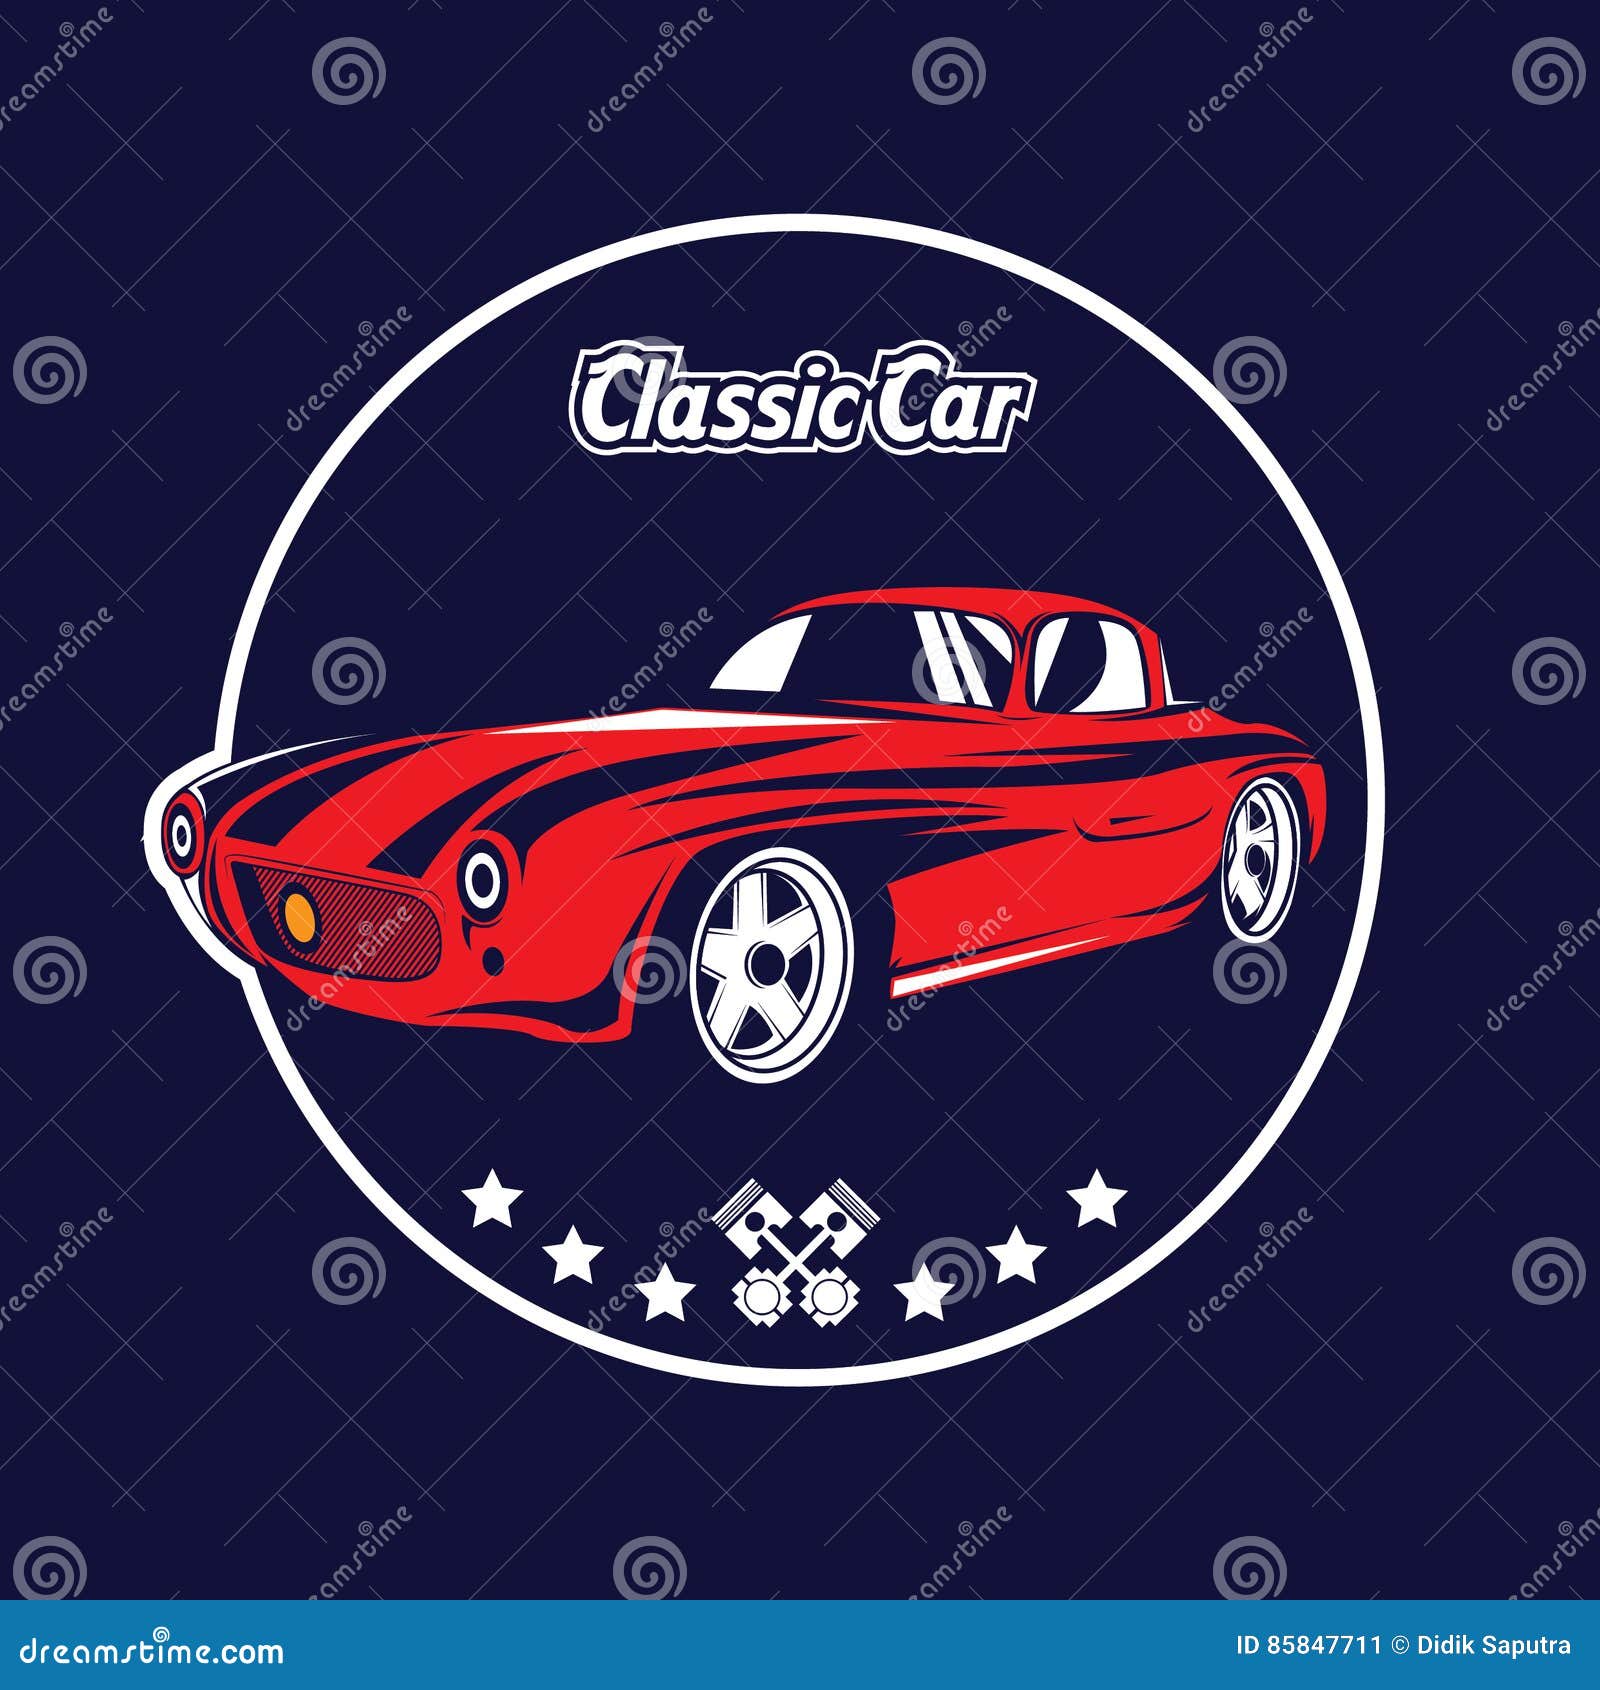 Classic car logo stock vector. Illustration of engine - 85847711